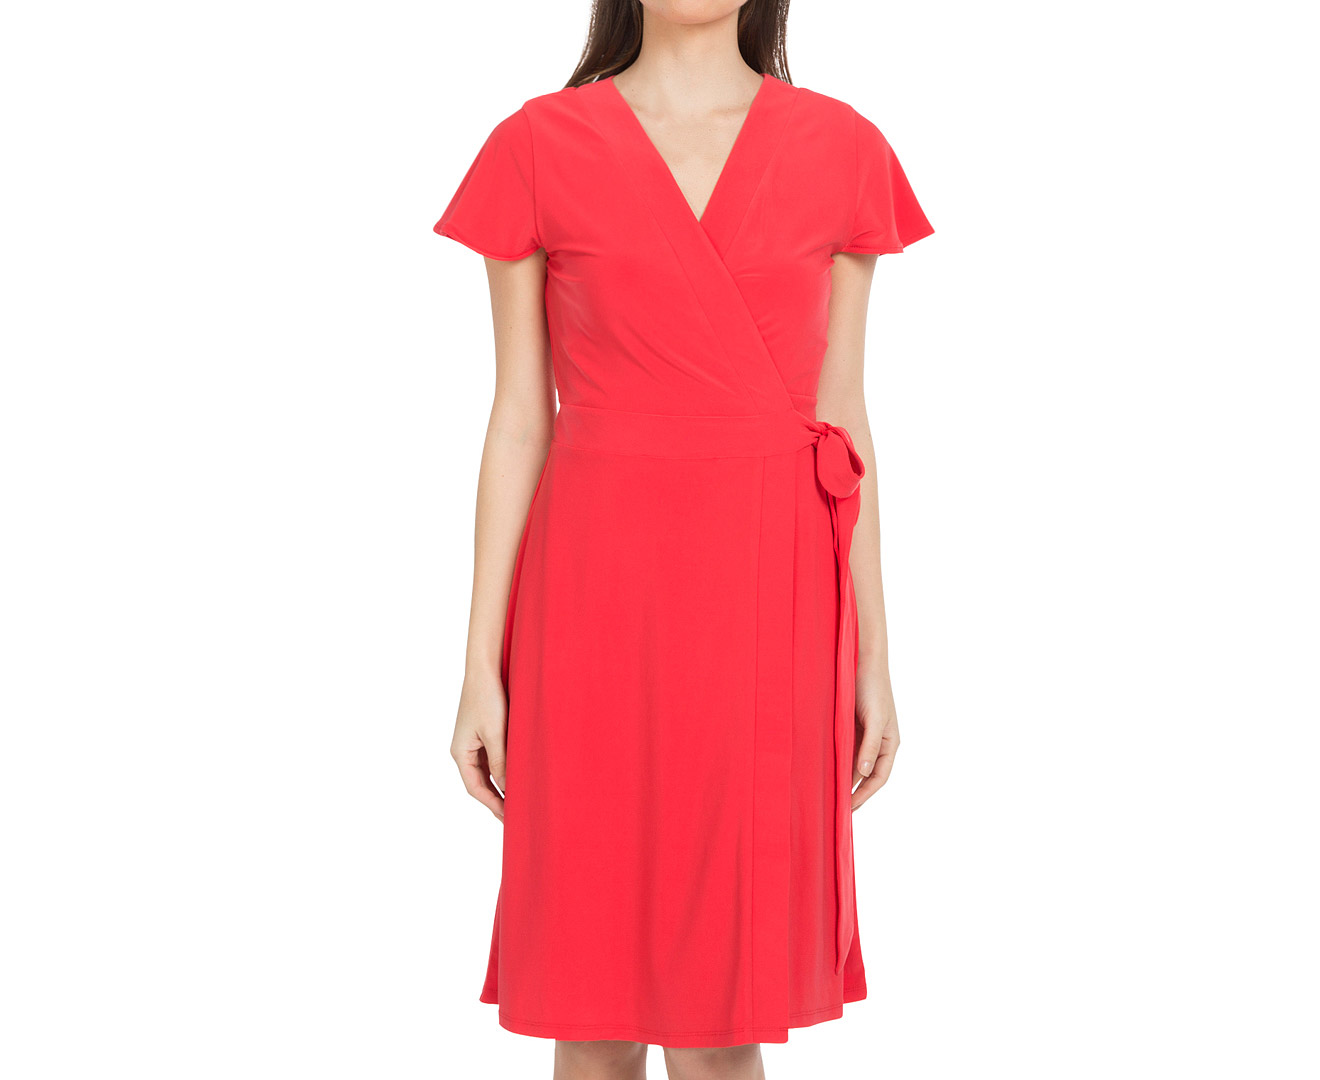 Diana Ferrari Women's Reina Wrap Dress - Vermillion | Scoopon Shopping